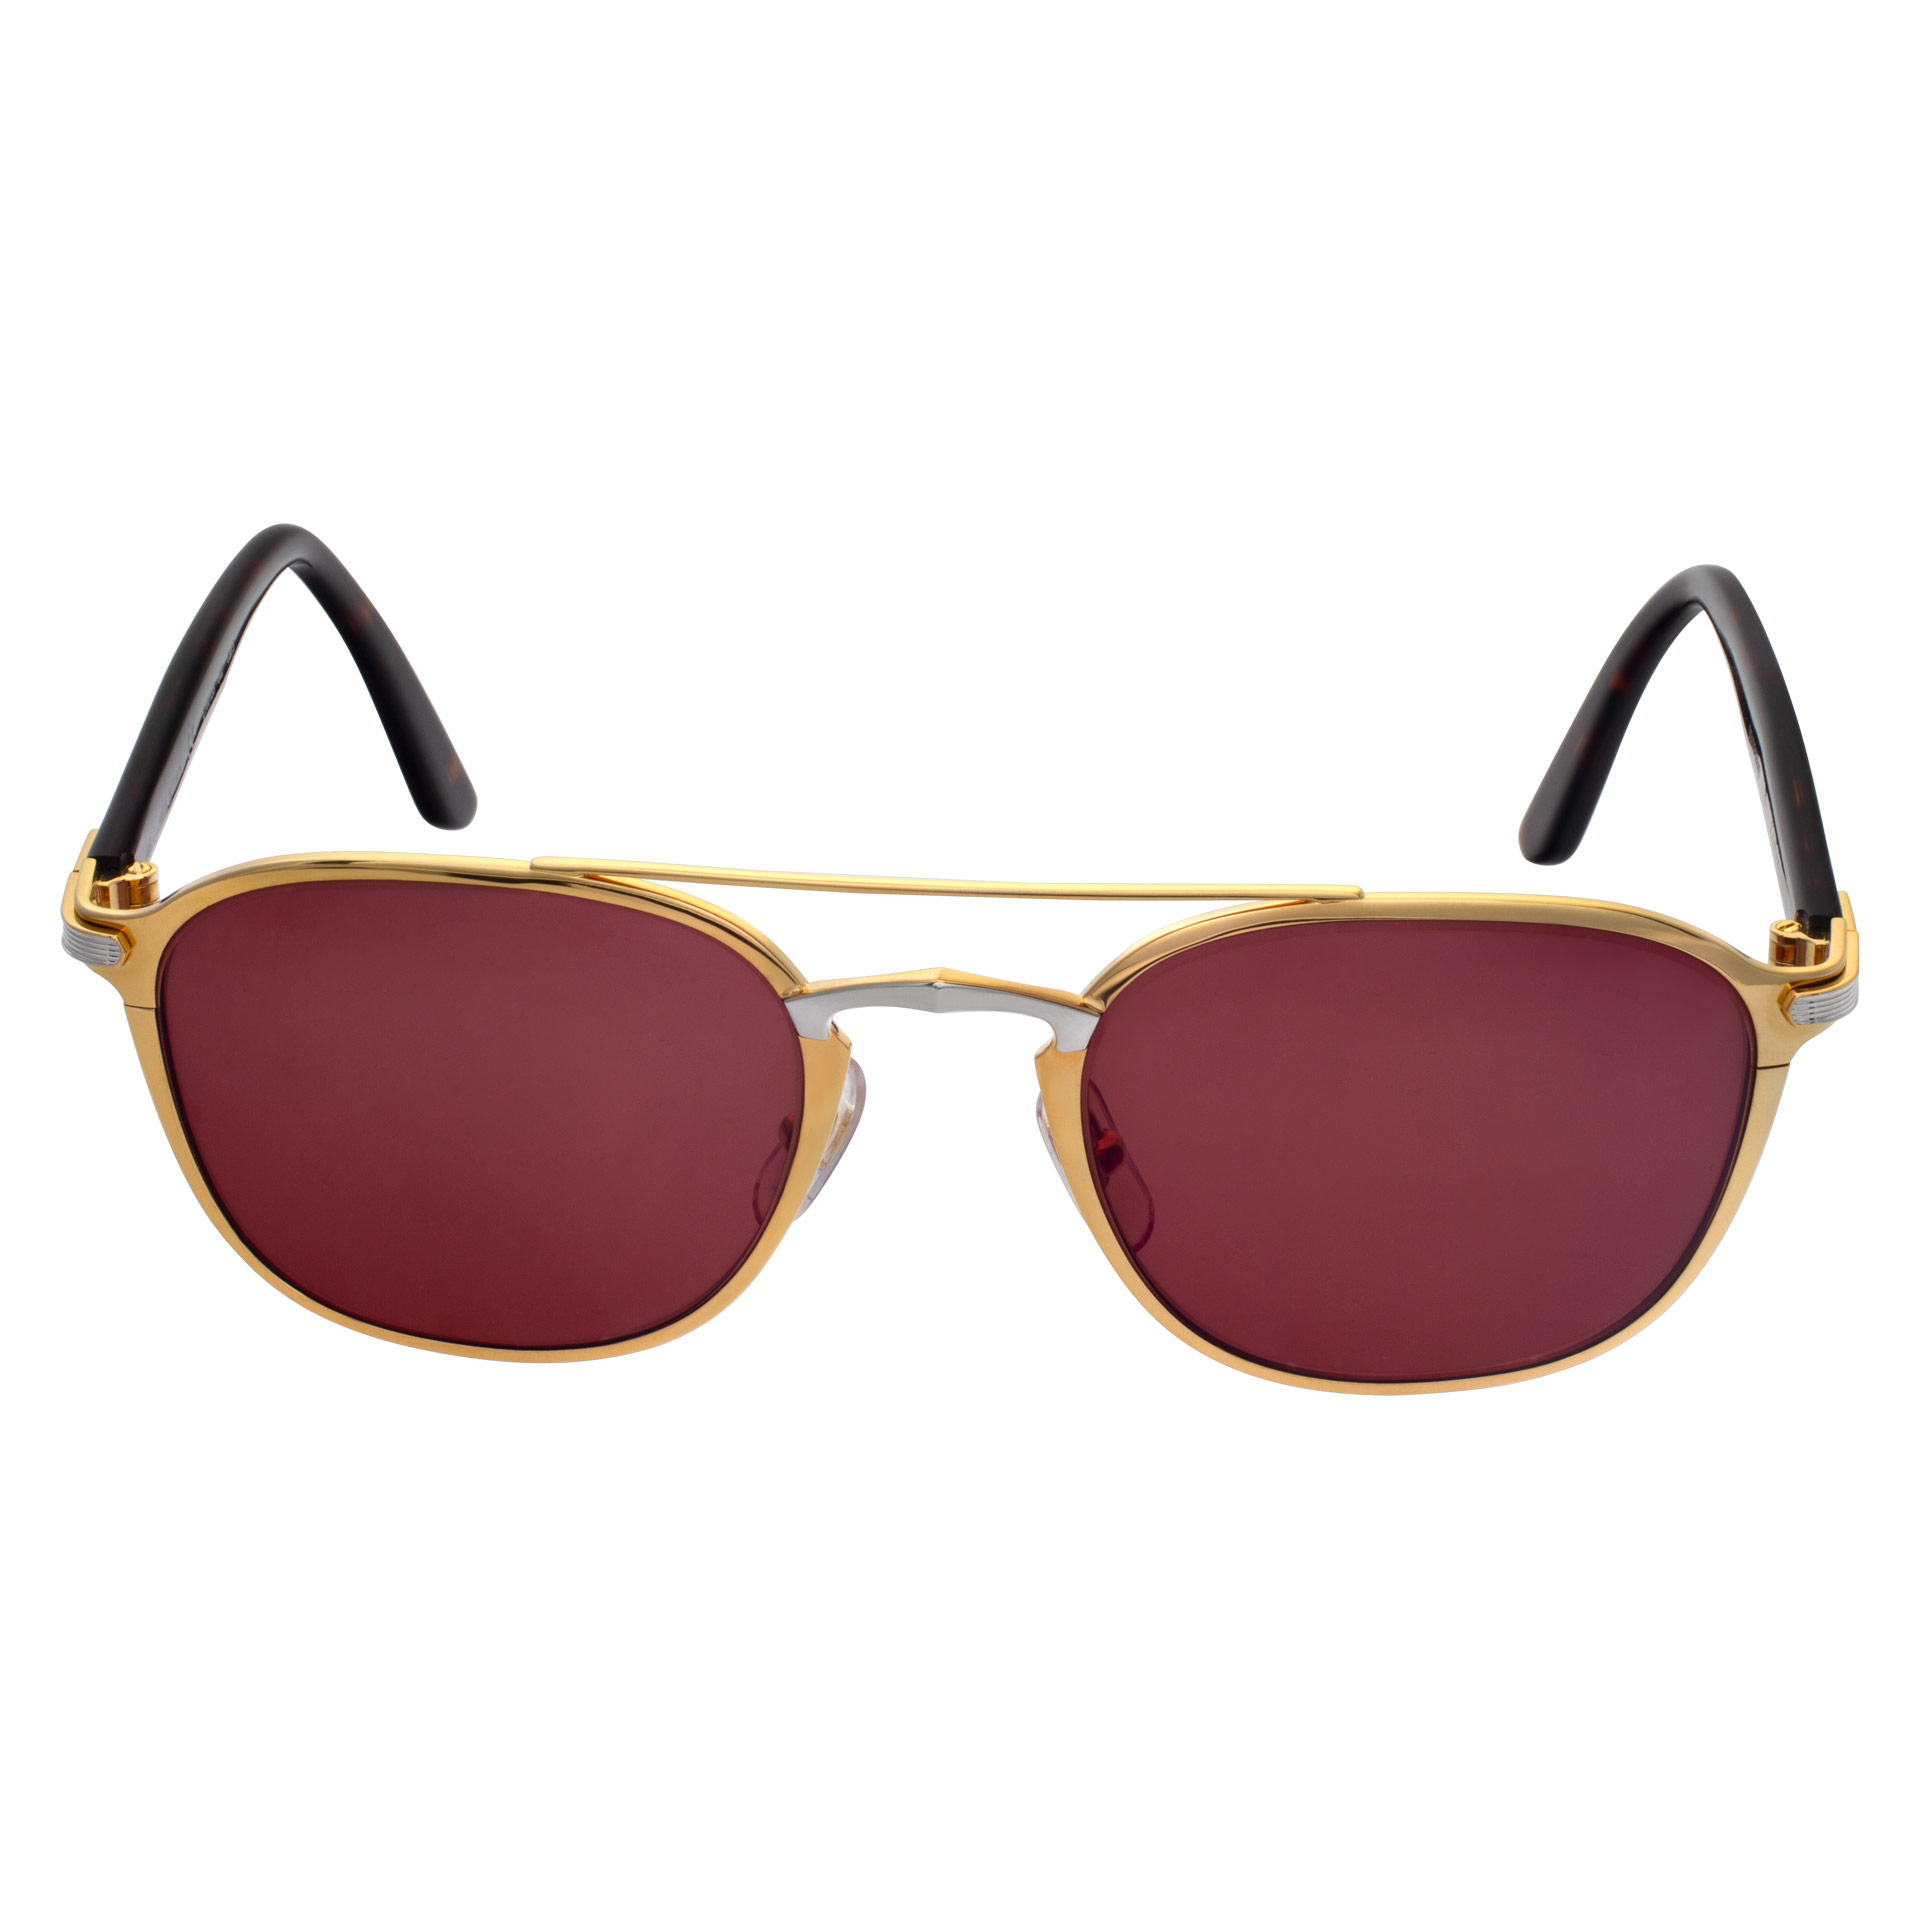 Cartier sunglasses image 3